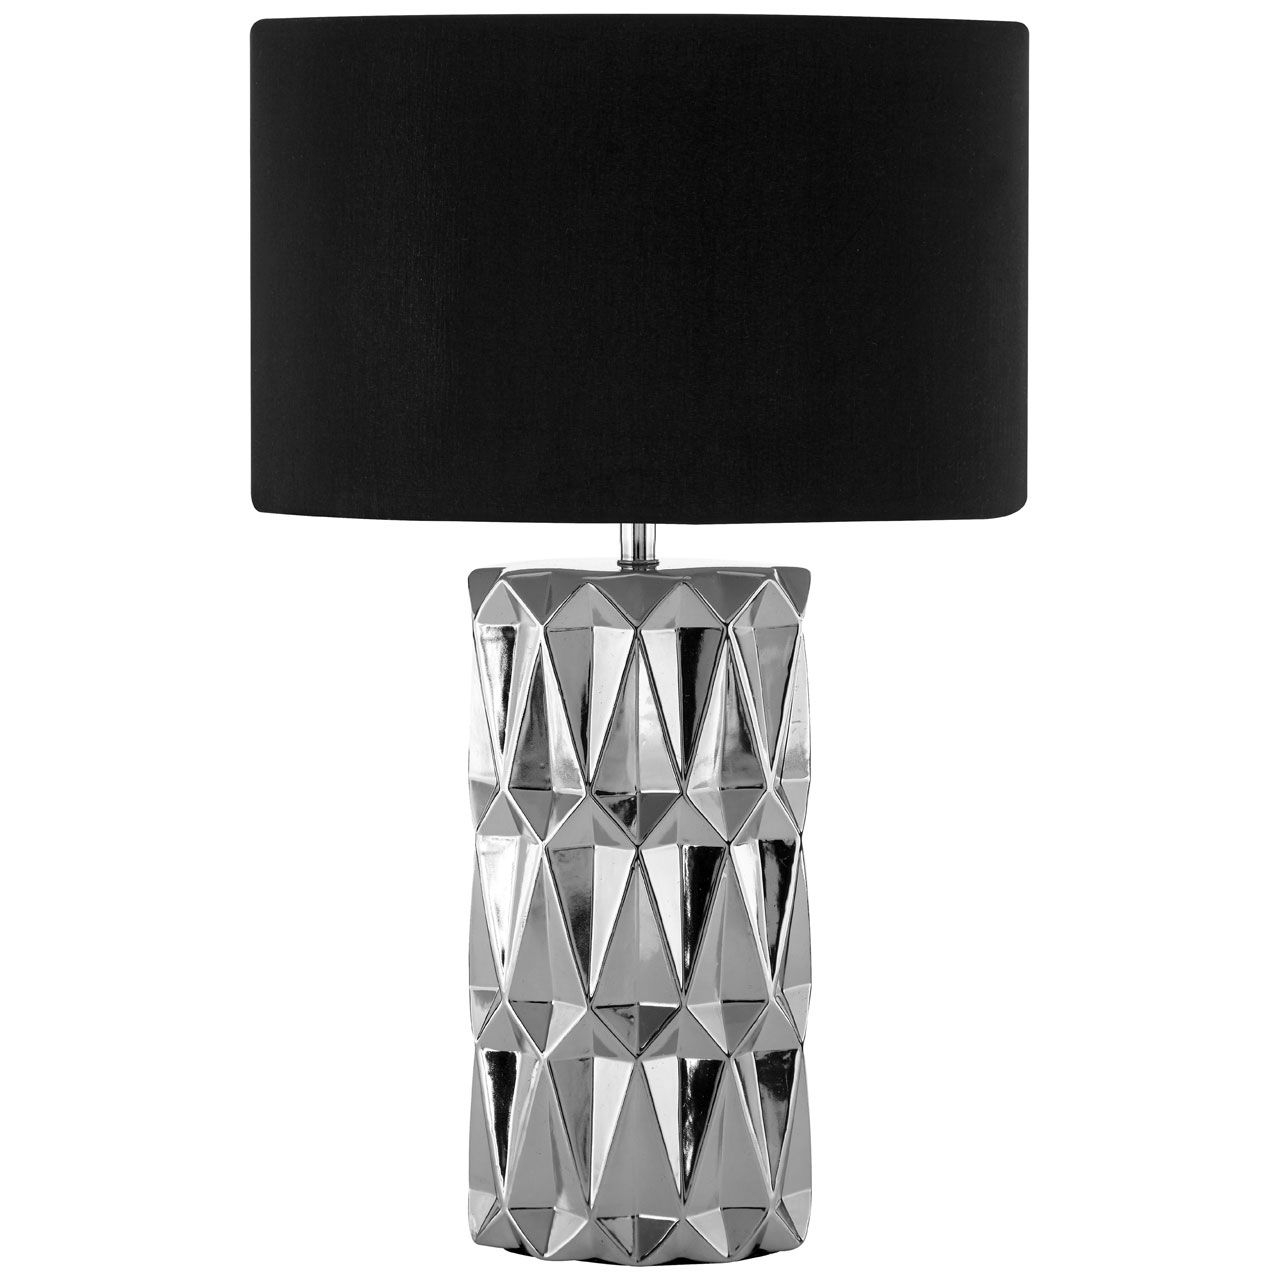 Jaxon Black Fabric Shade Table Lamp With Silver Geometric Ceramic Base